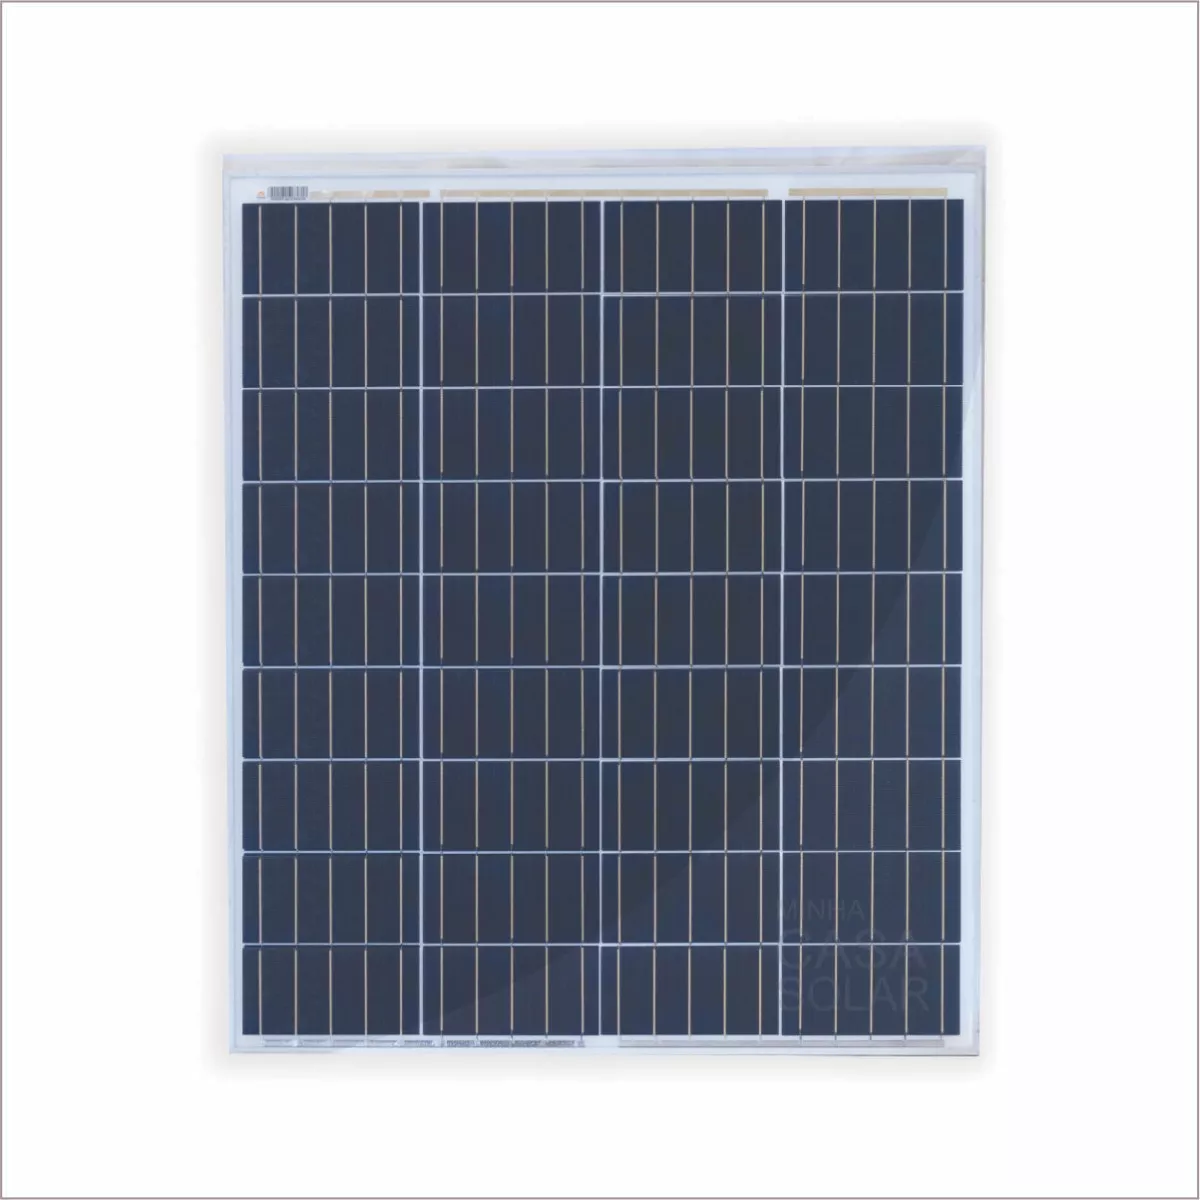 Painel Solar Policristalino 80w Resun Solar - Rsm080p